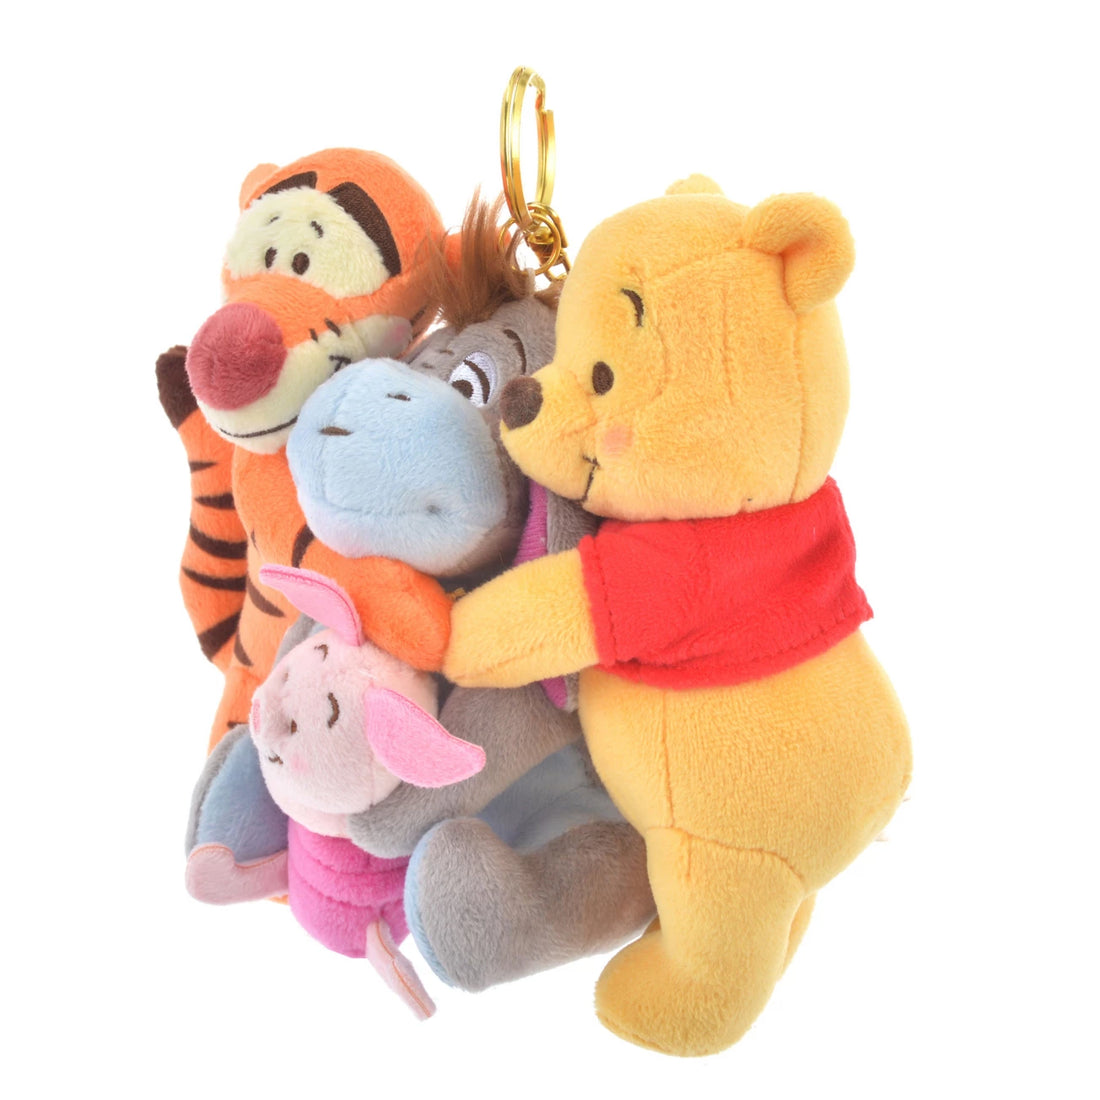 日本迪士尼 Disney Pooh & Friends Happy Hug Keyring 公仔鑰匙扣